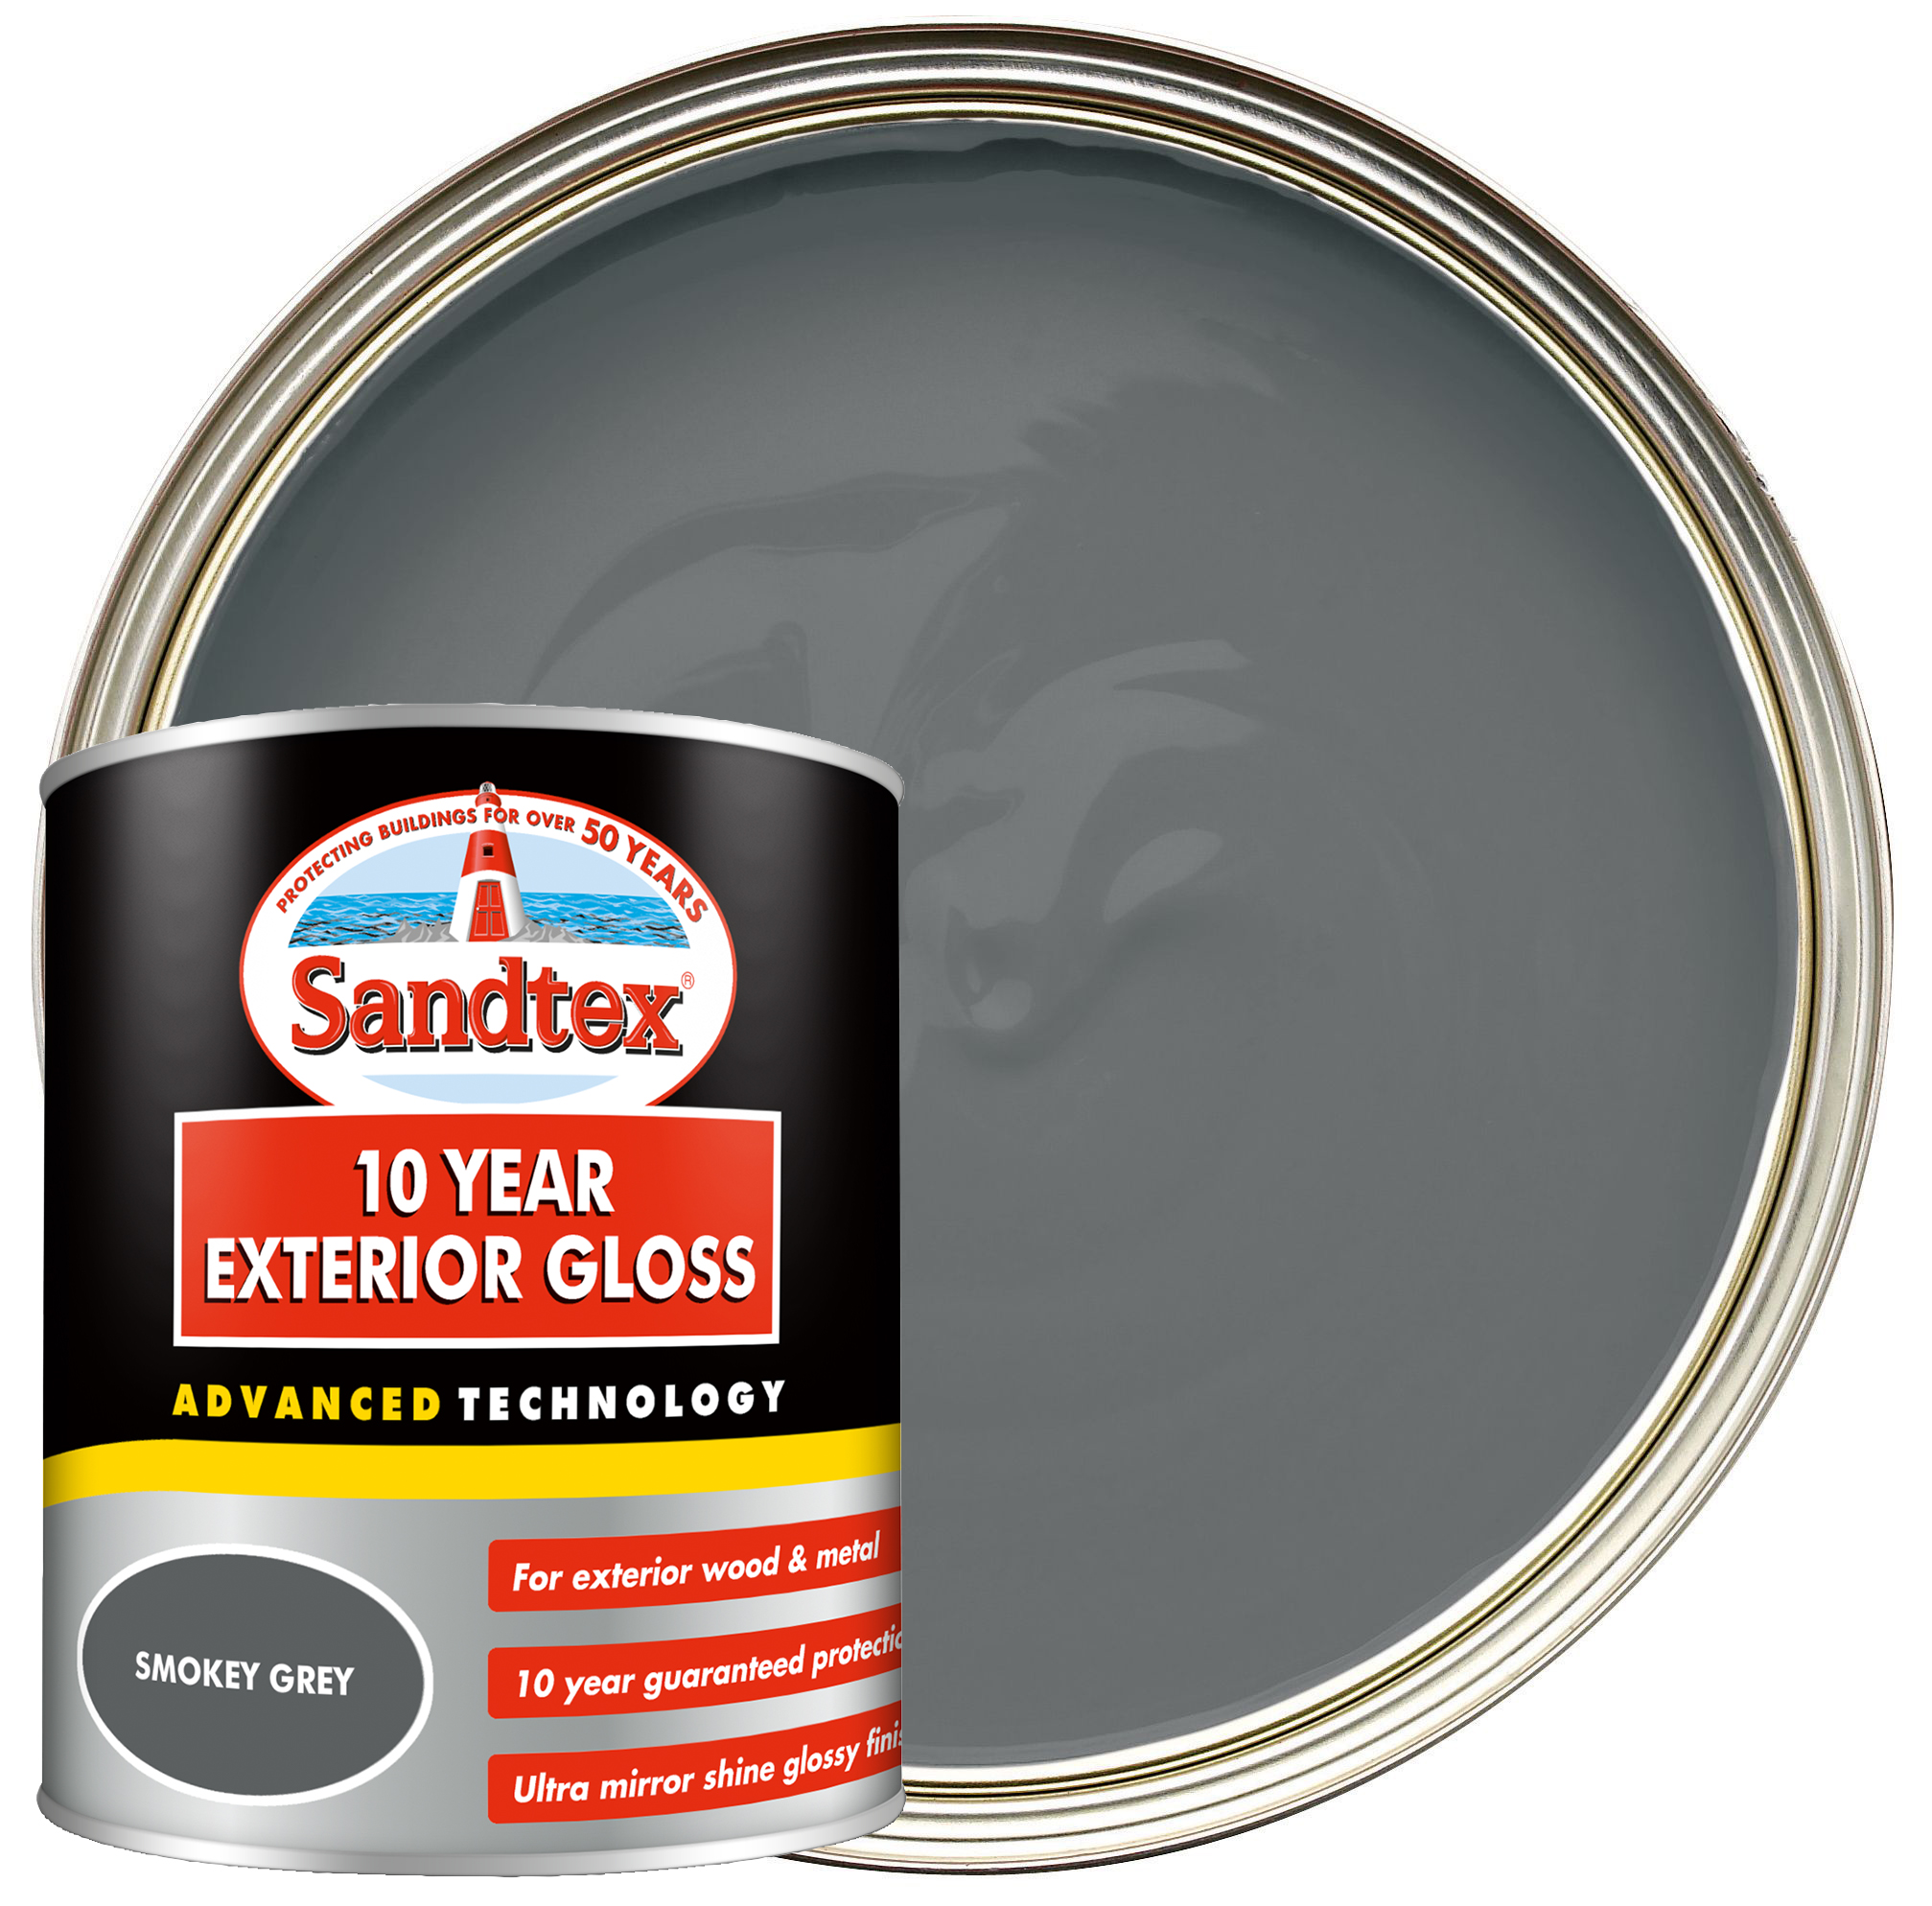 Sandtex 10 Year Exterior Gloss Paint - Smoky Grey - 750ml